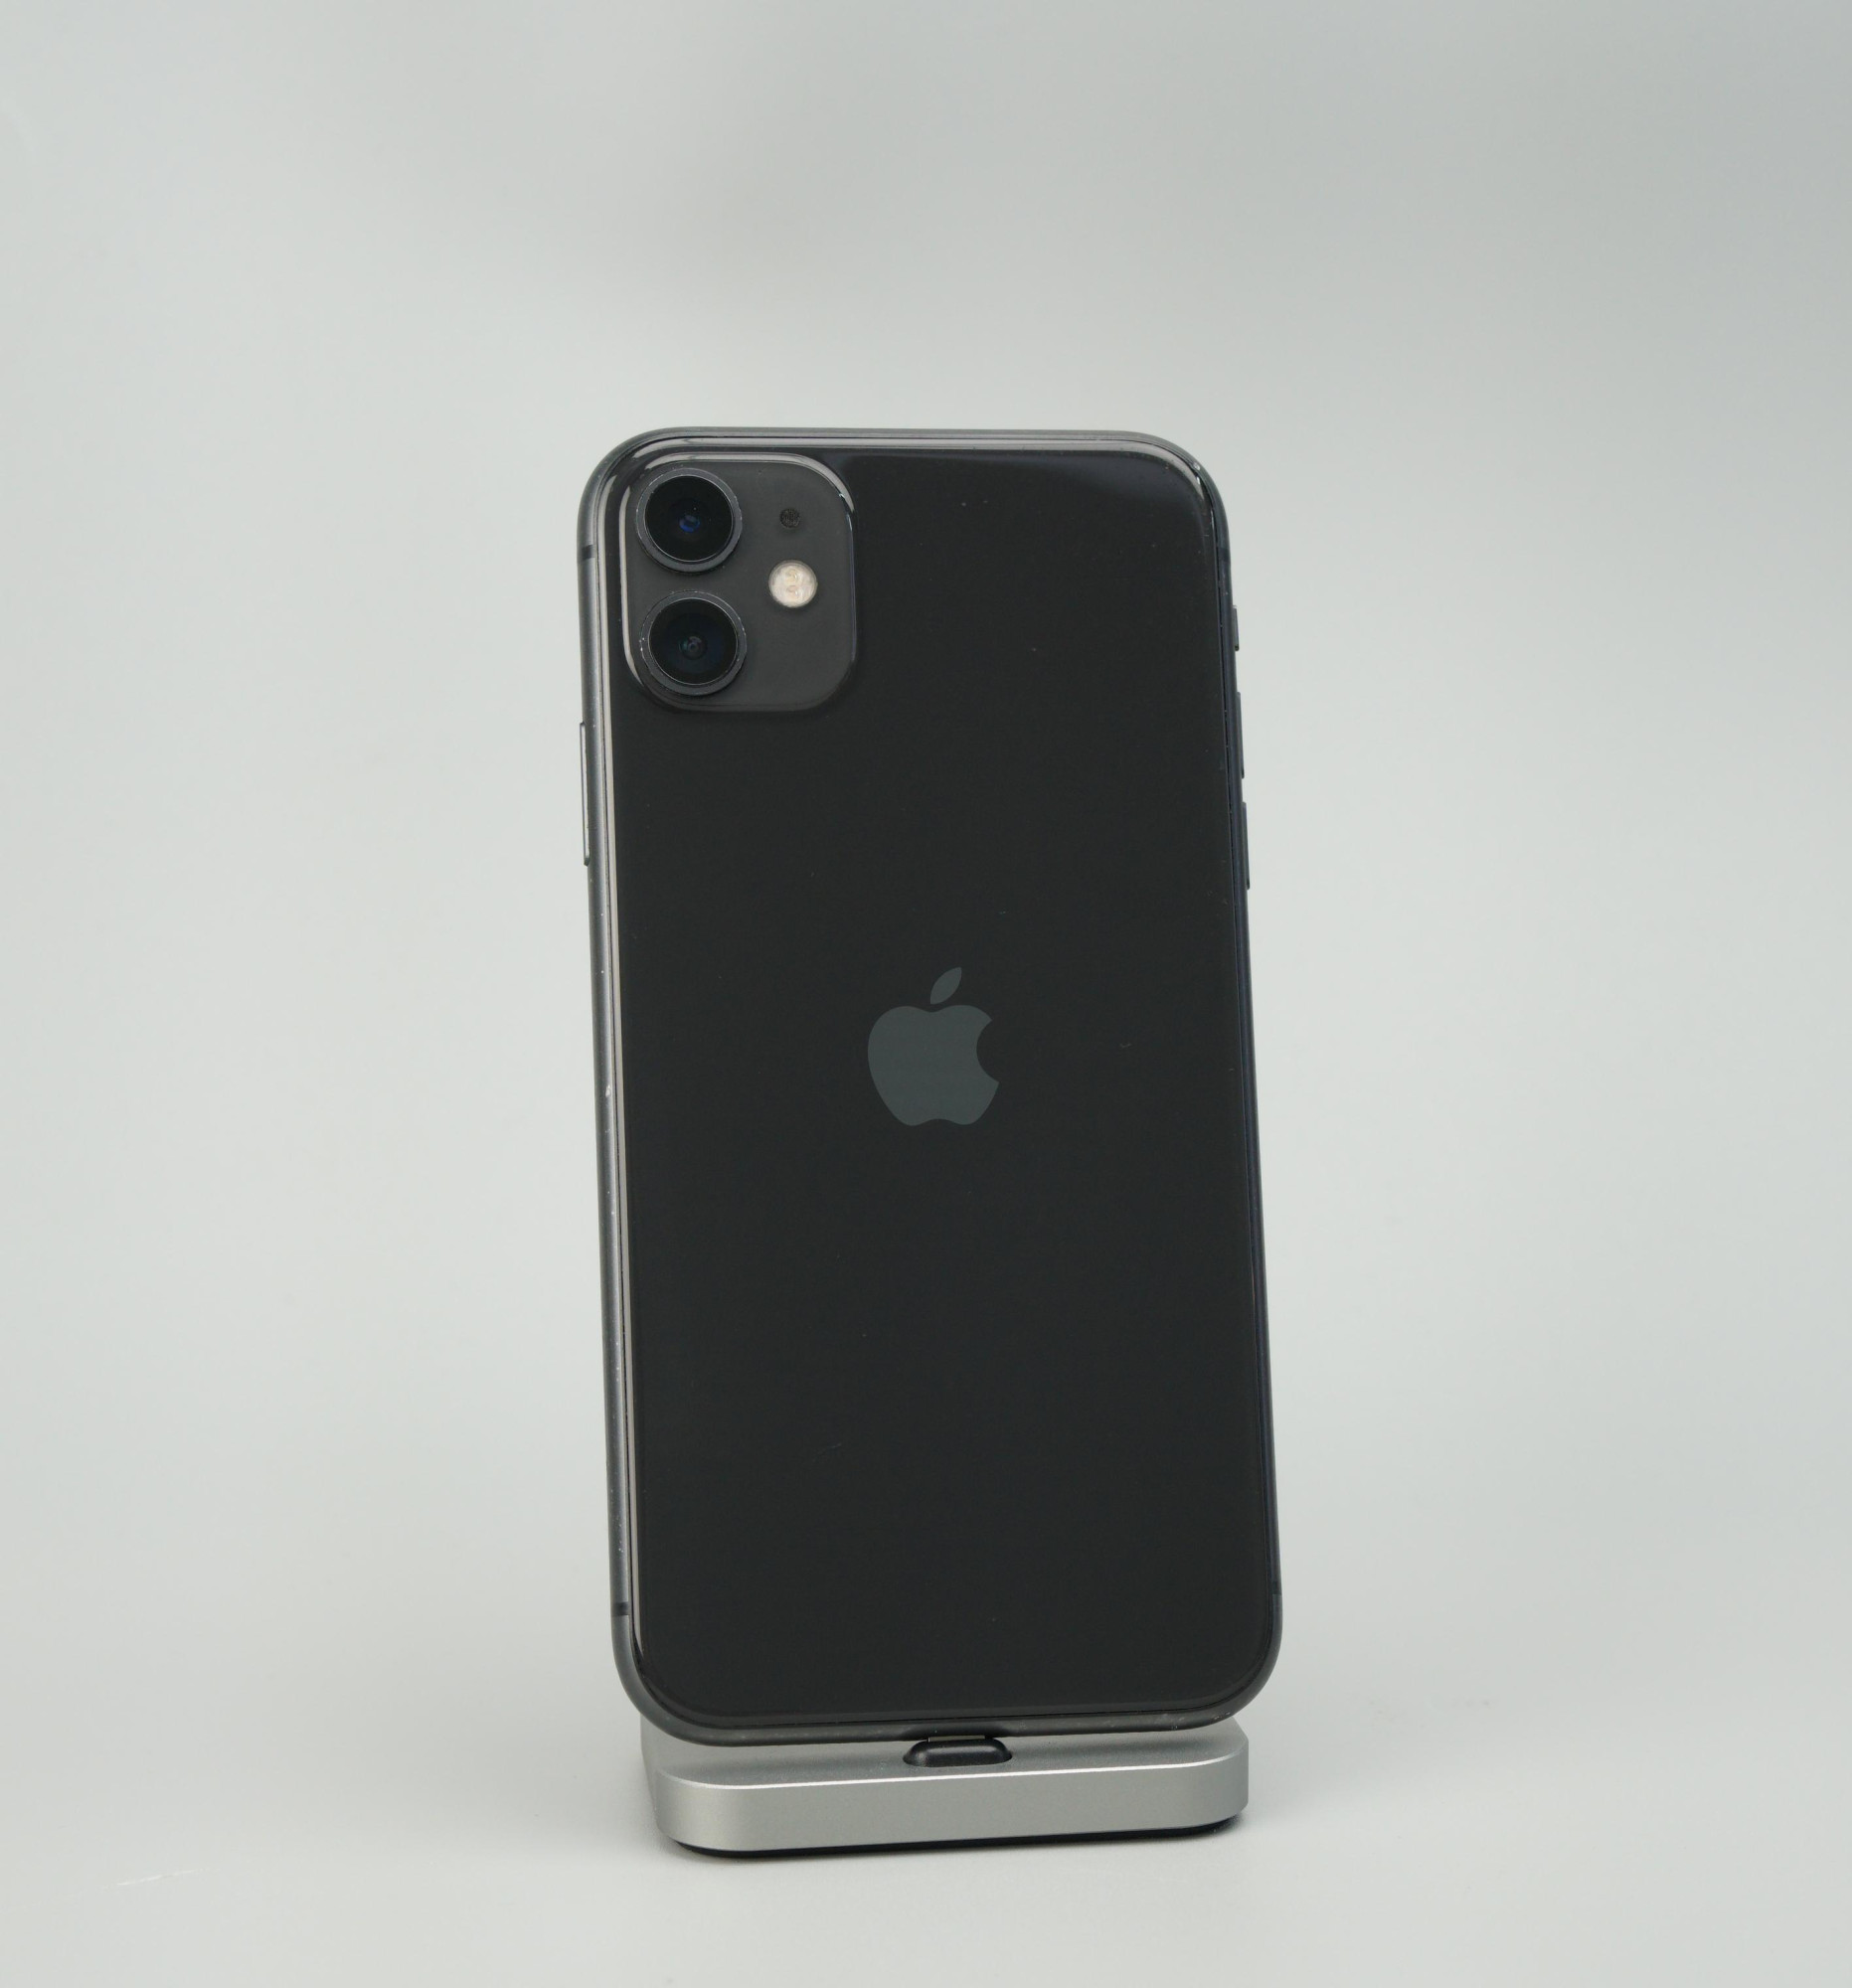 Apple iPhone 11 128GB Black (MWN72CH/A) 17